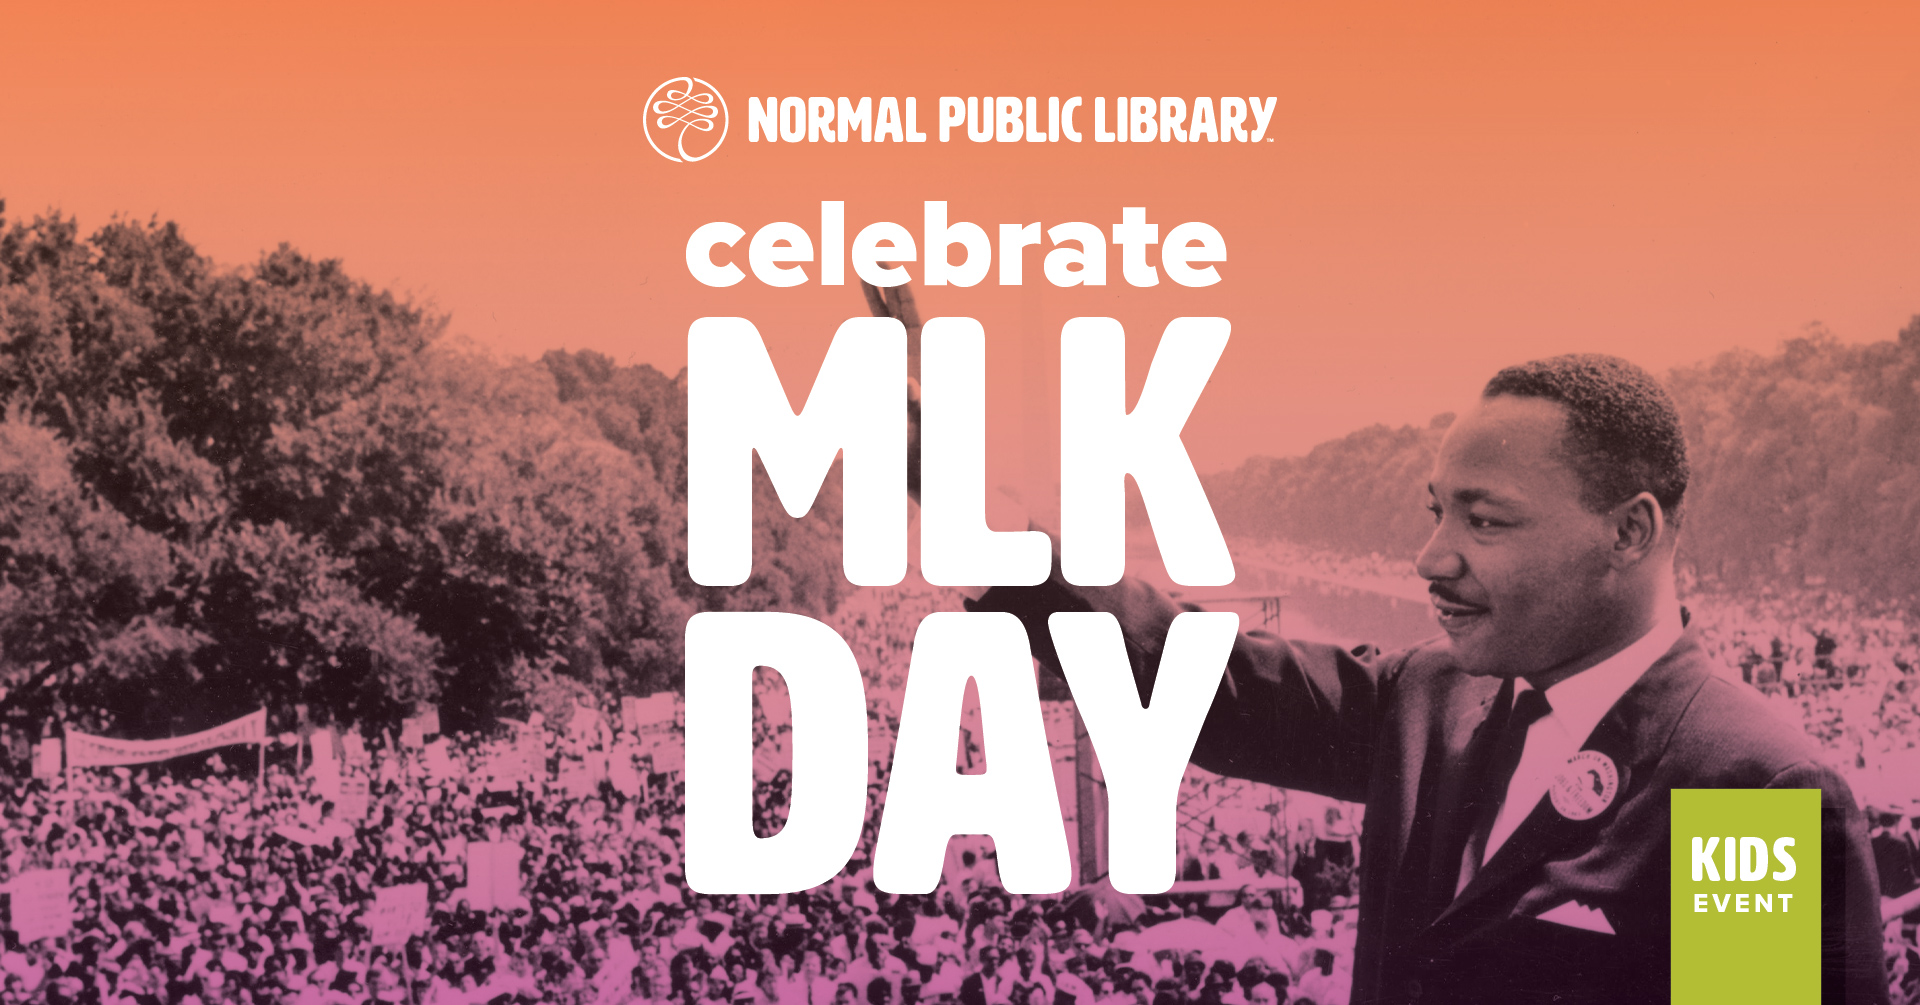 Image for Celebrate MLK Day.